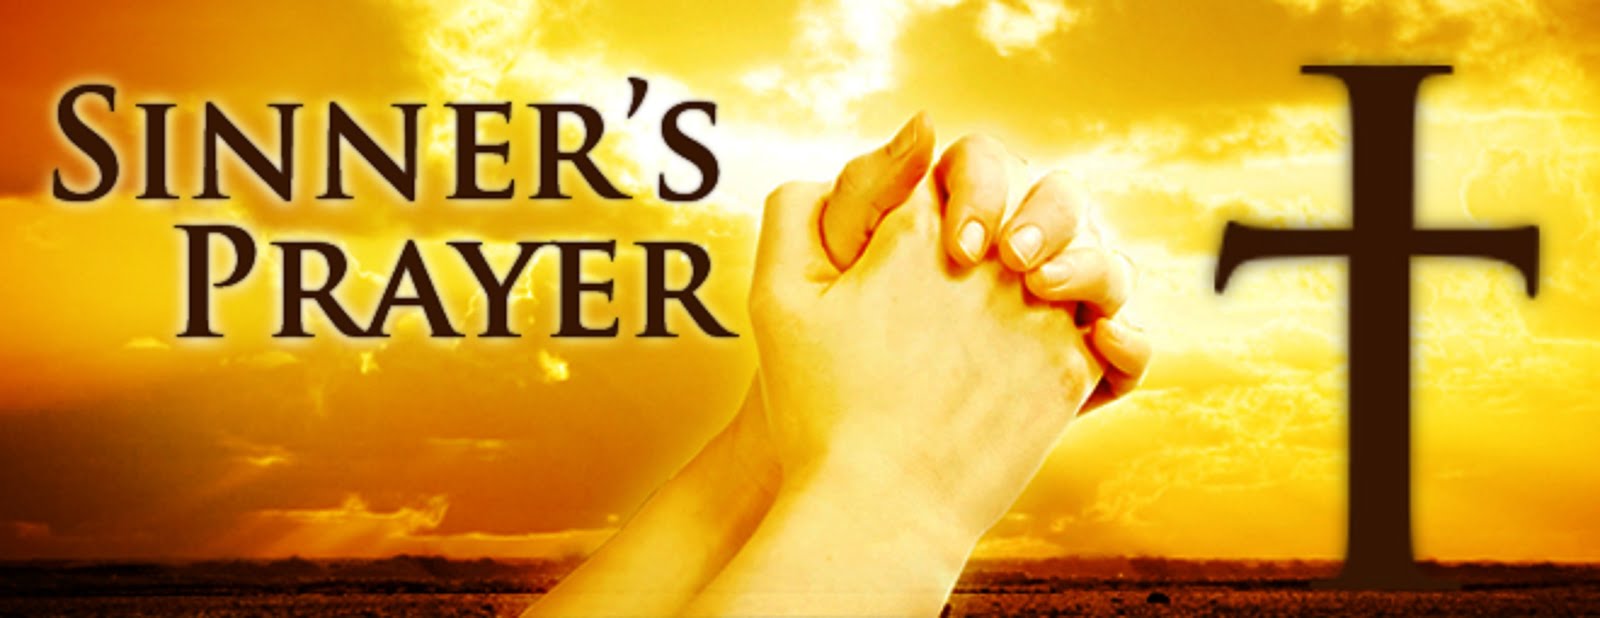 SINNER'S PRAYER - FALSE DOCTRINE - TAUGHT NO WHERE IN THE BIBLE